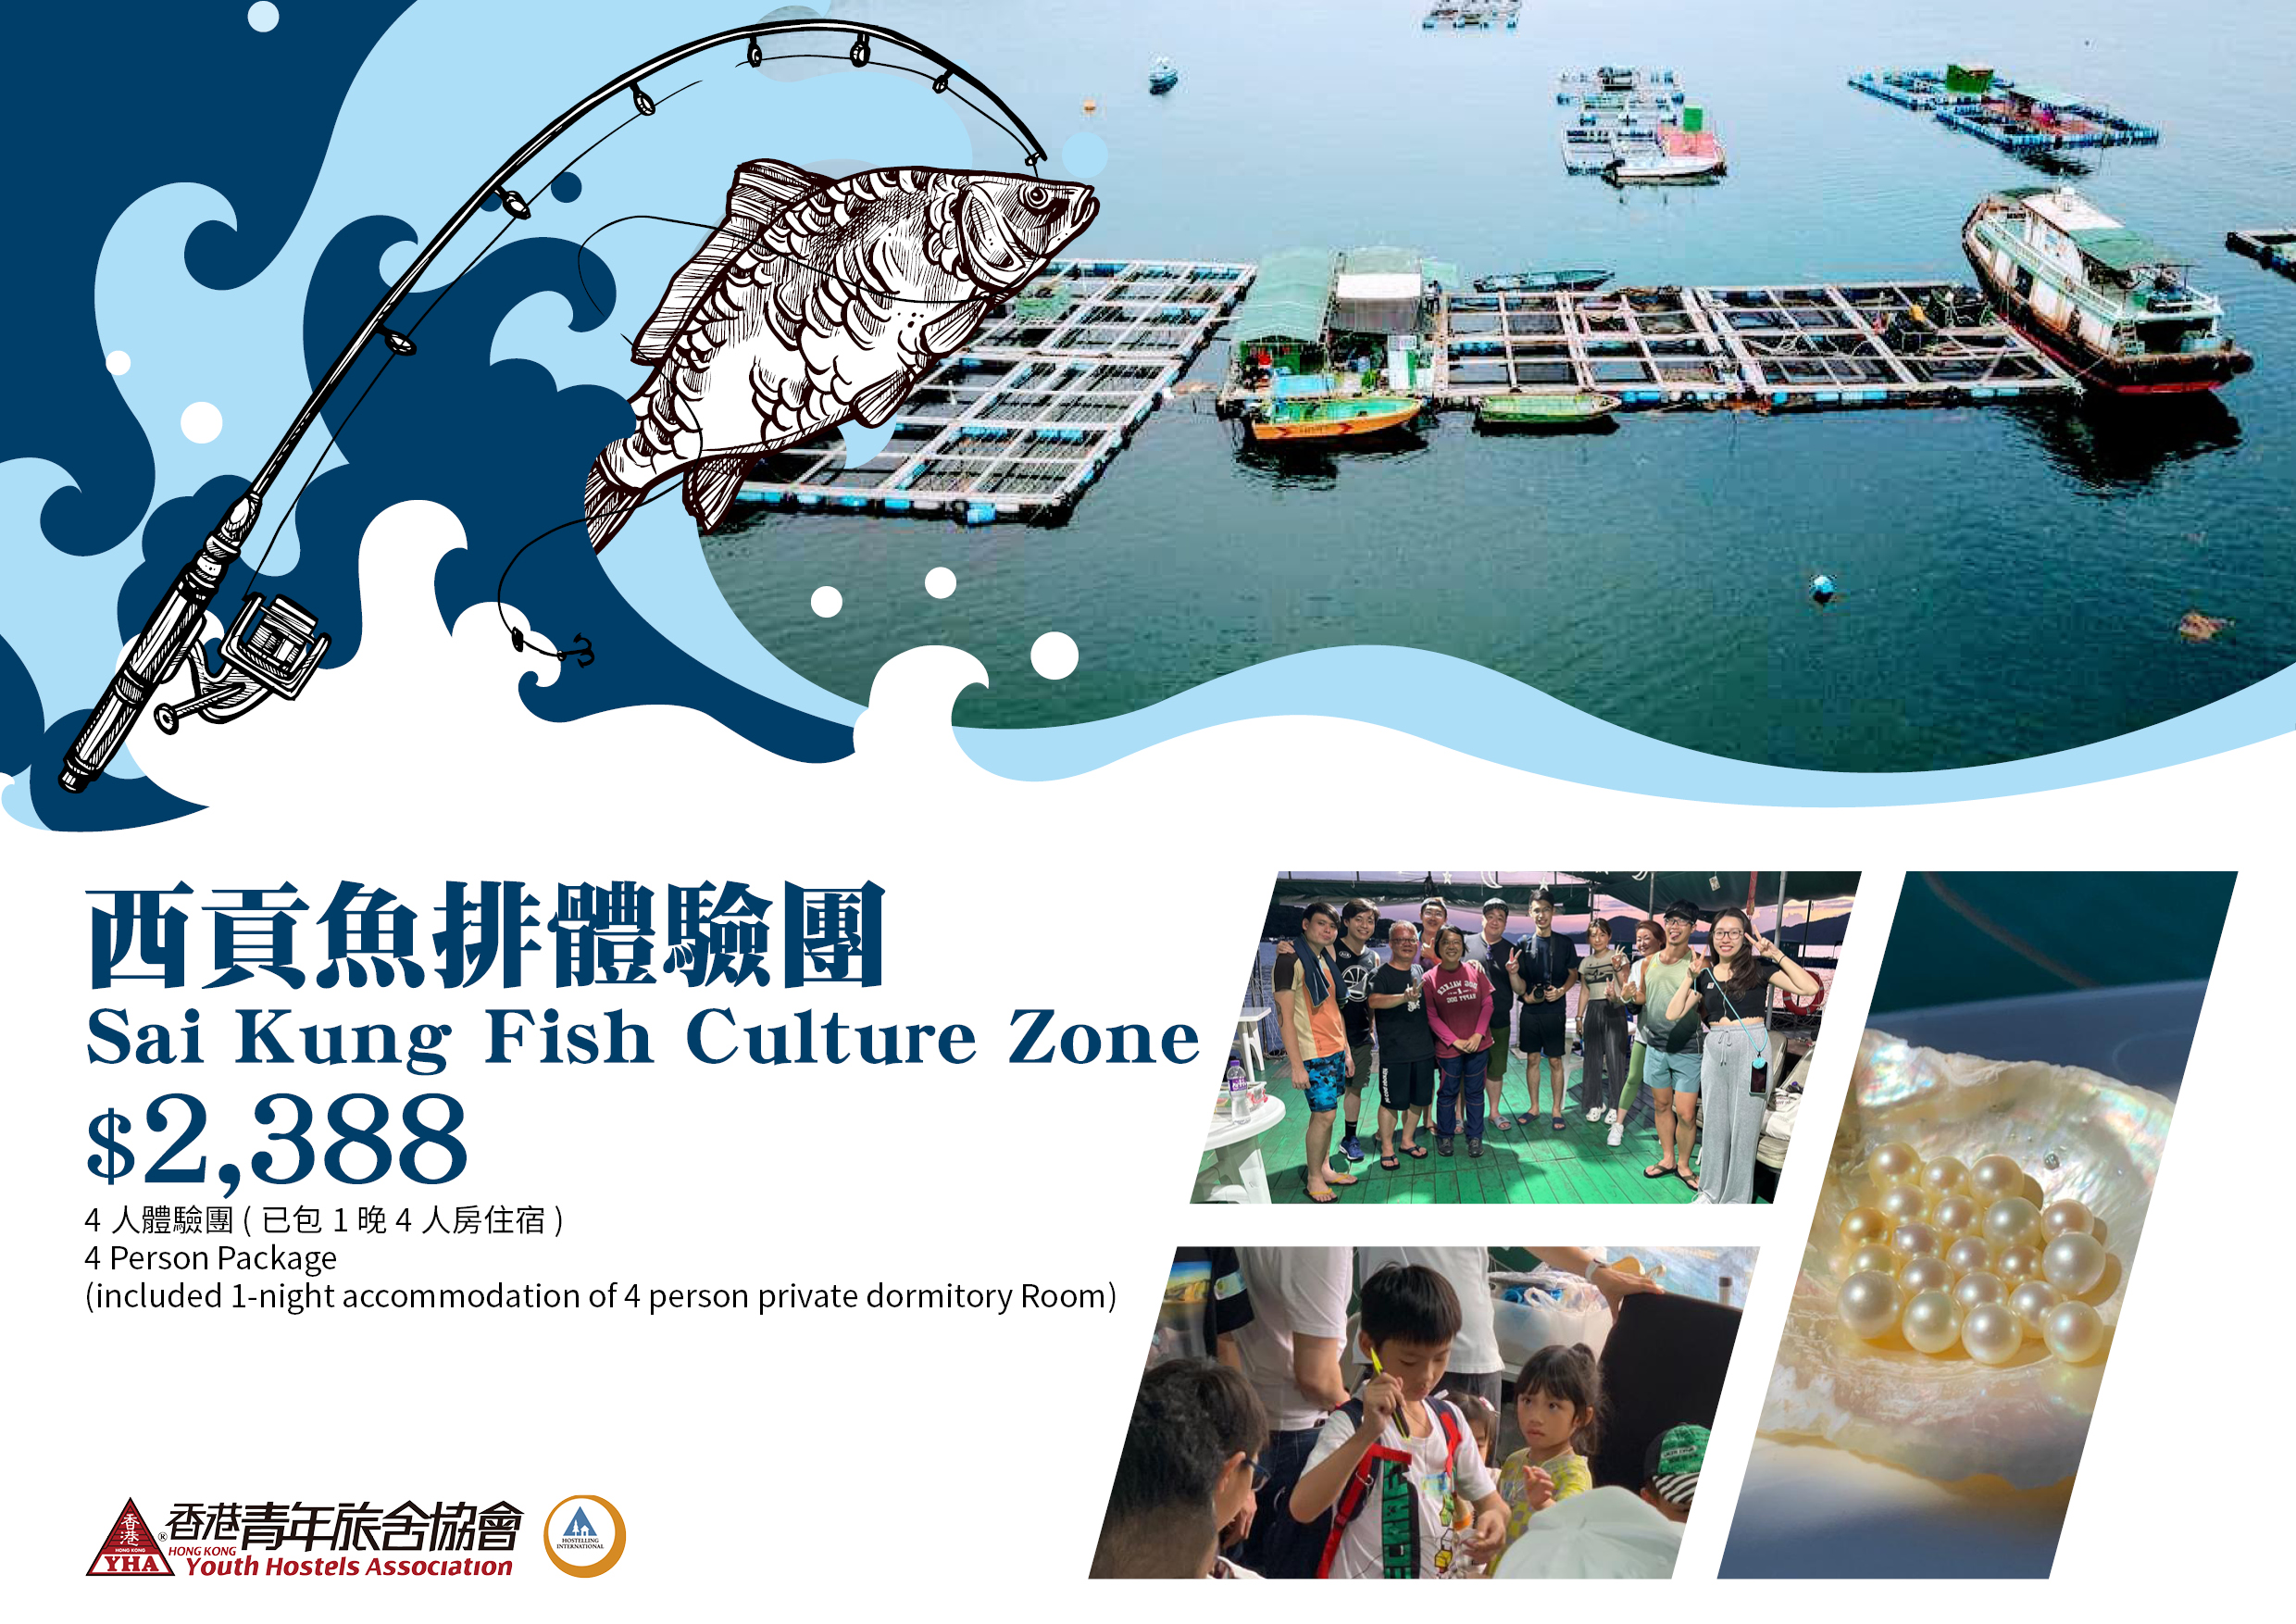 Sai Kung Fish Culture Zone